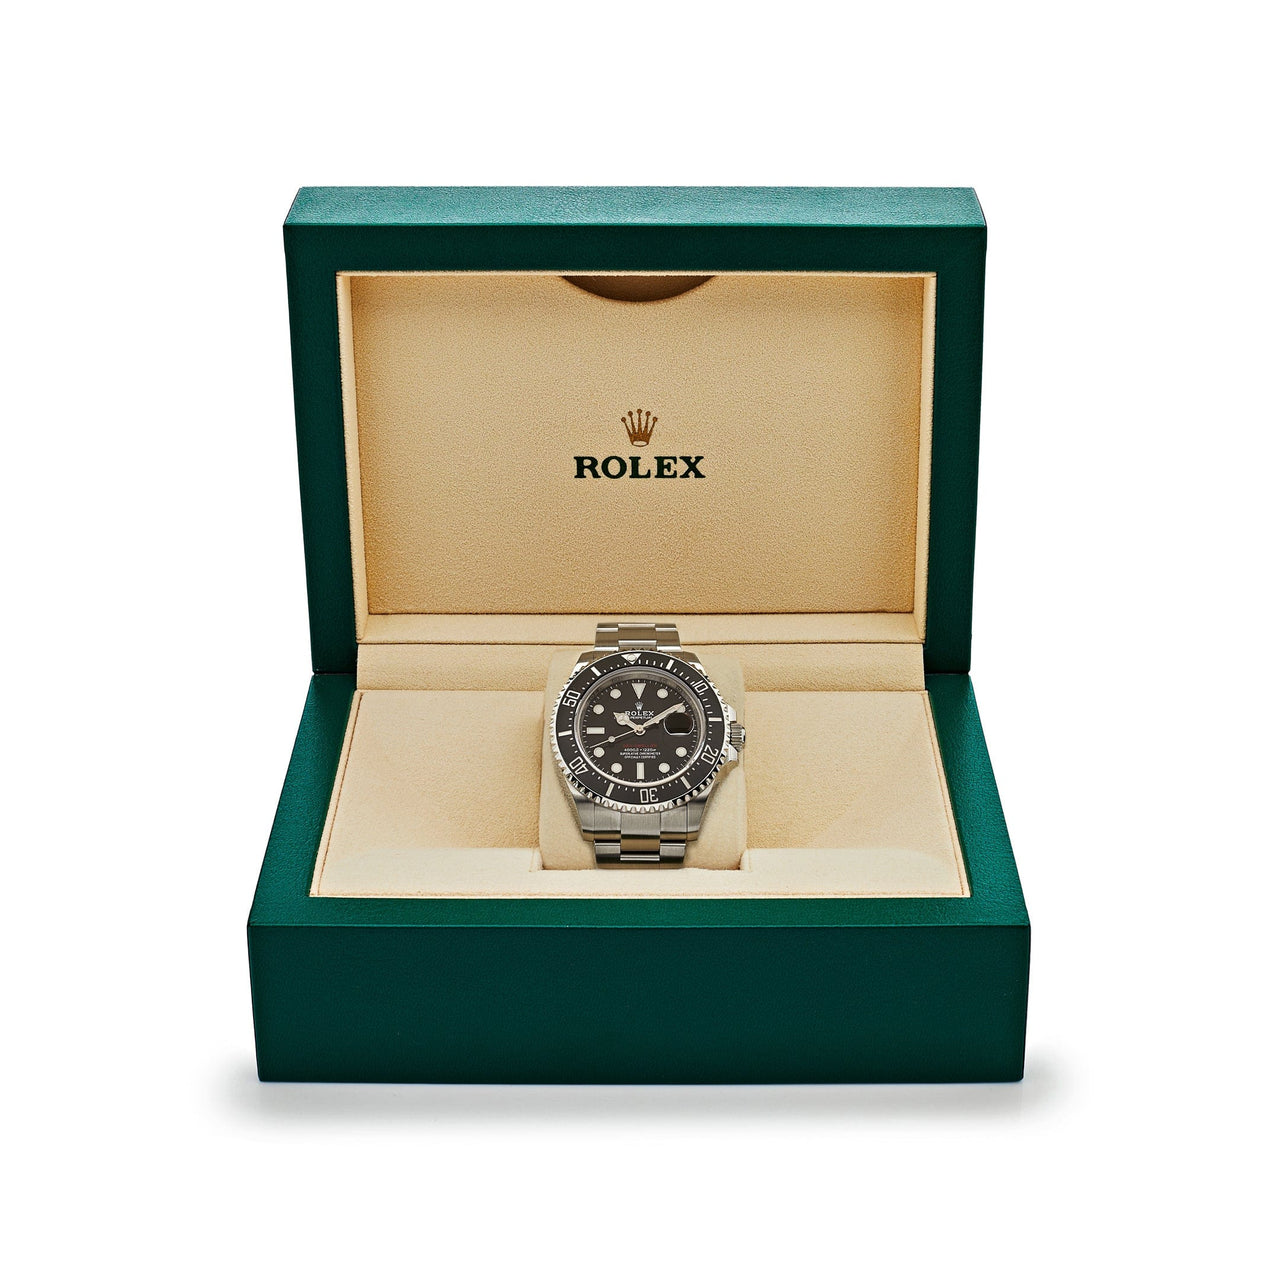 Luxury Watch Rolex Sea Dweller 43mm Stainless Steel Black Dial 126600 Wrist Aficionado